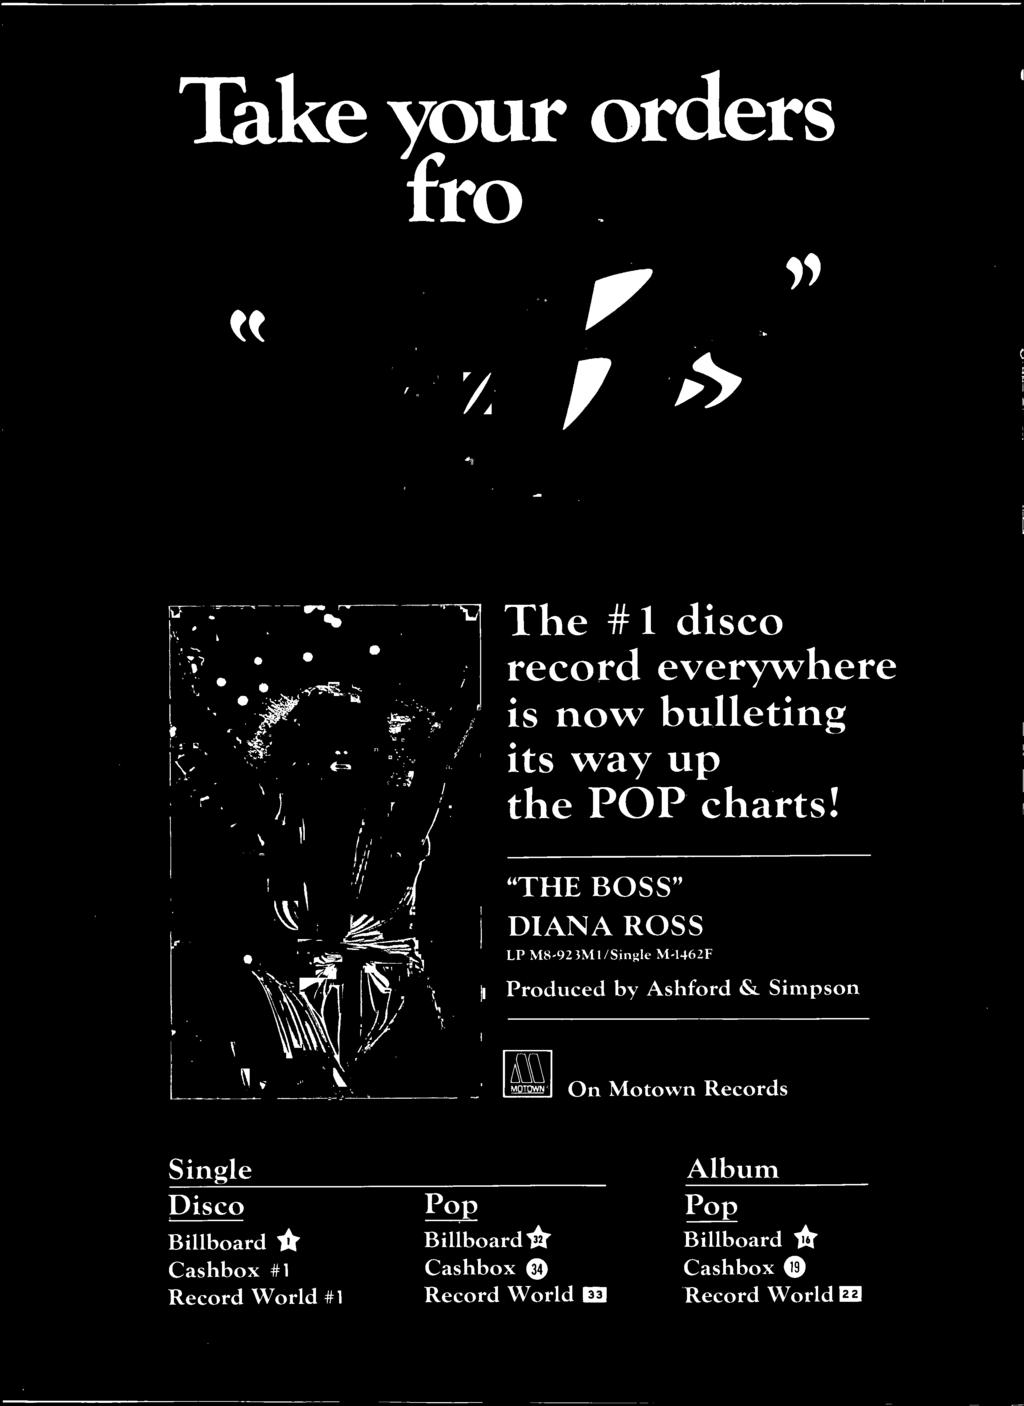 "THE BOSS" DIANA ROSS LP M8-923M1/Single M -1462F Produced by Ashford & Simpson A